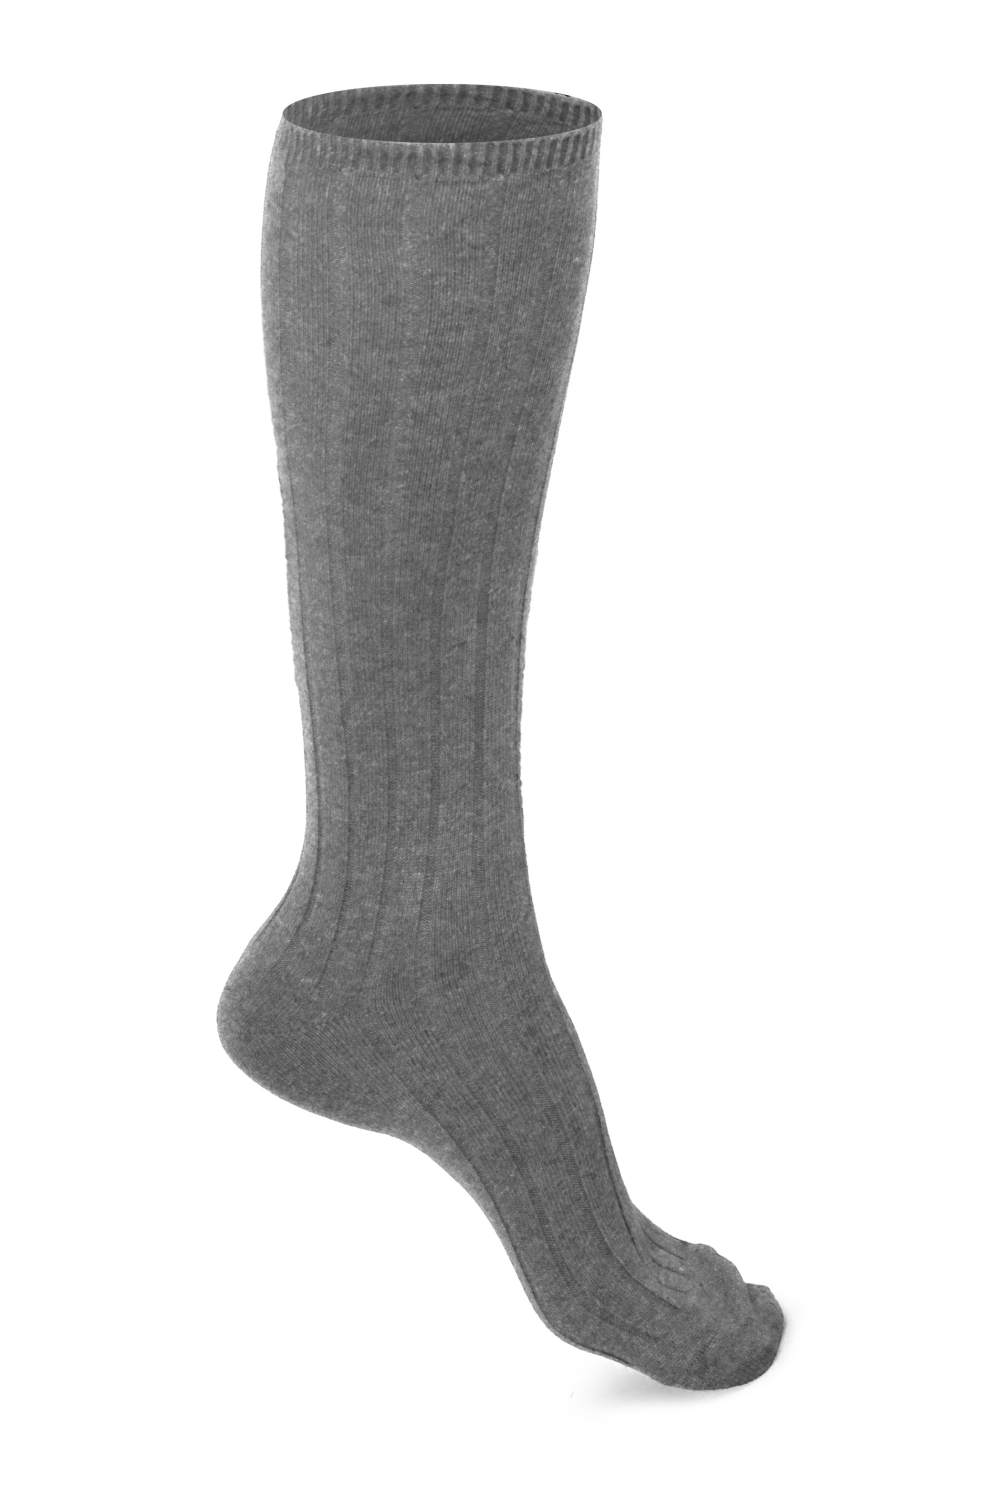 Kasjmier accessoires sokken dragibus long w grijs gemeleerd 39 42